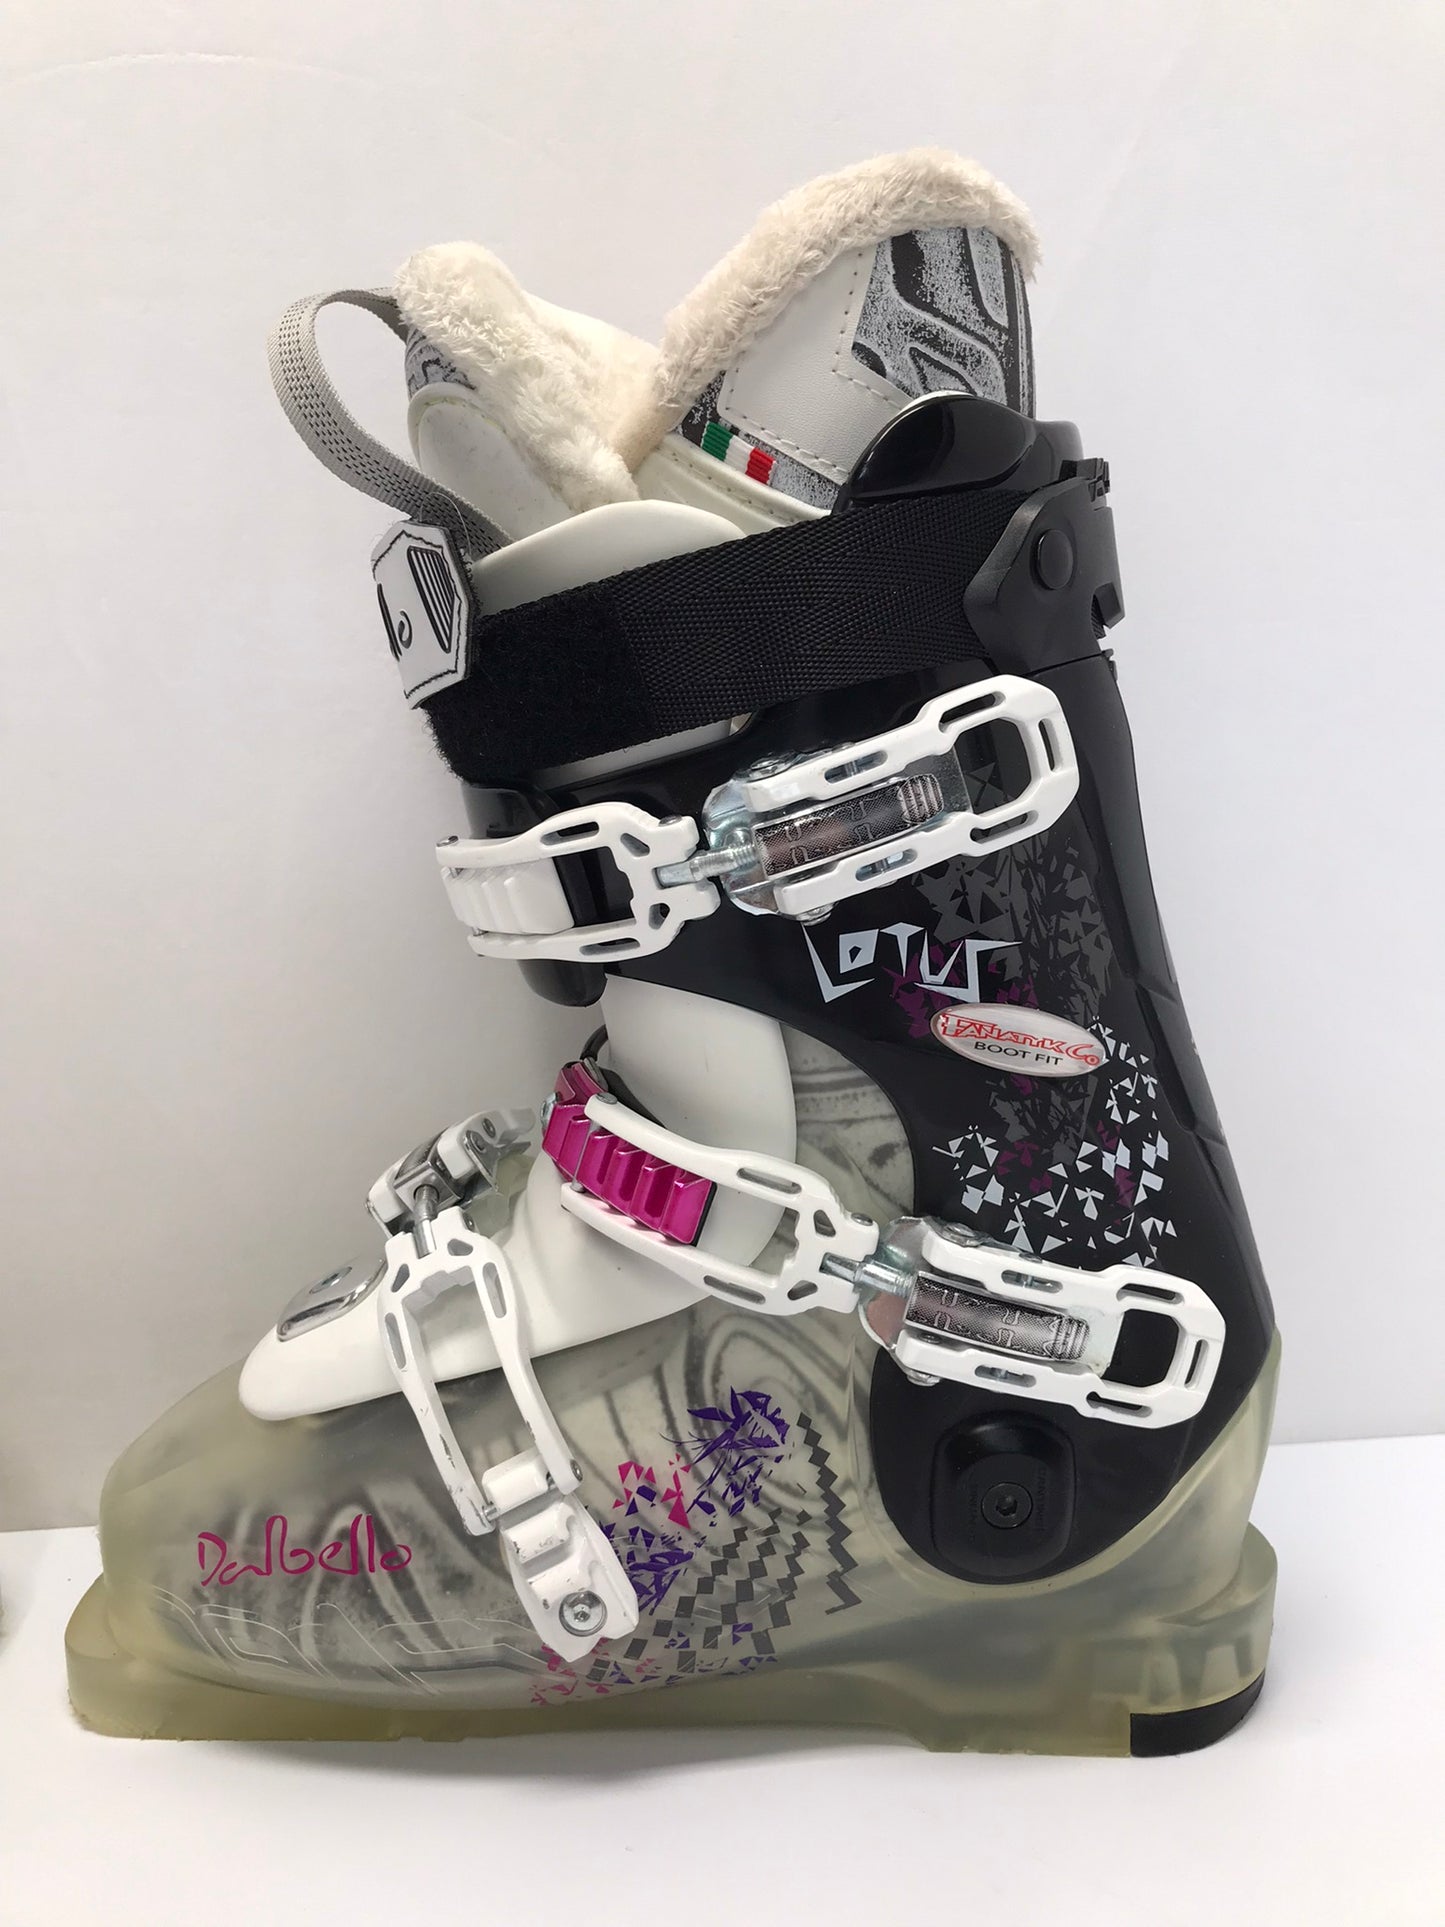 Ski Boots Mondo Size 23.0 Ladies Size 5.5 276 mm Dalbello Lotus Clear Black Pink Excellent